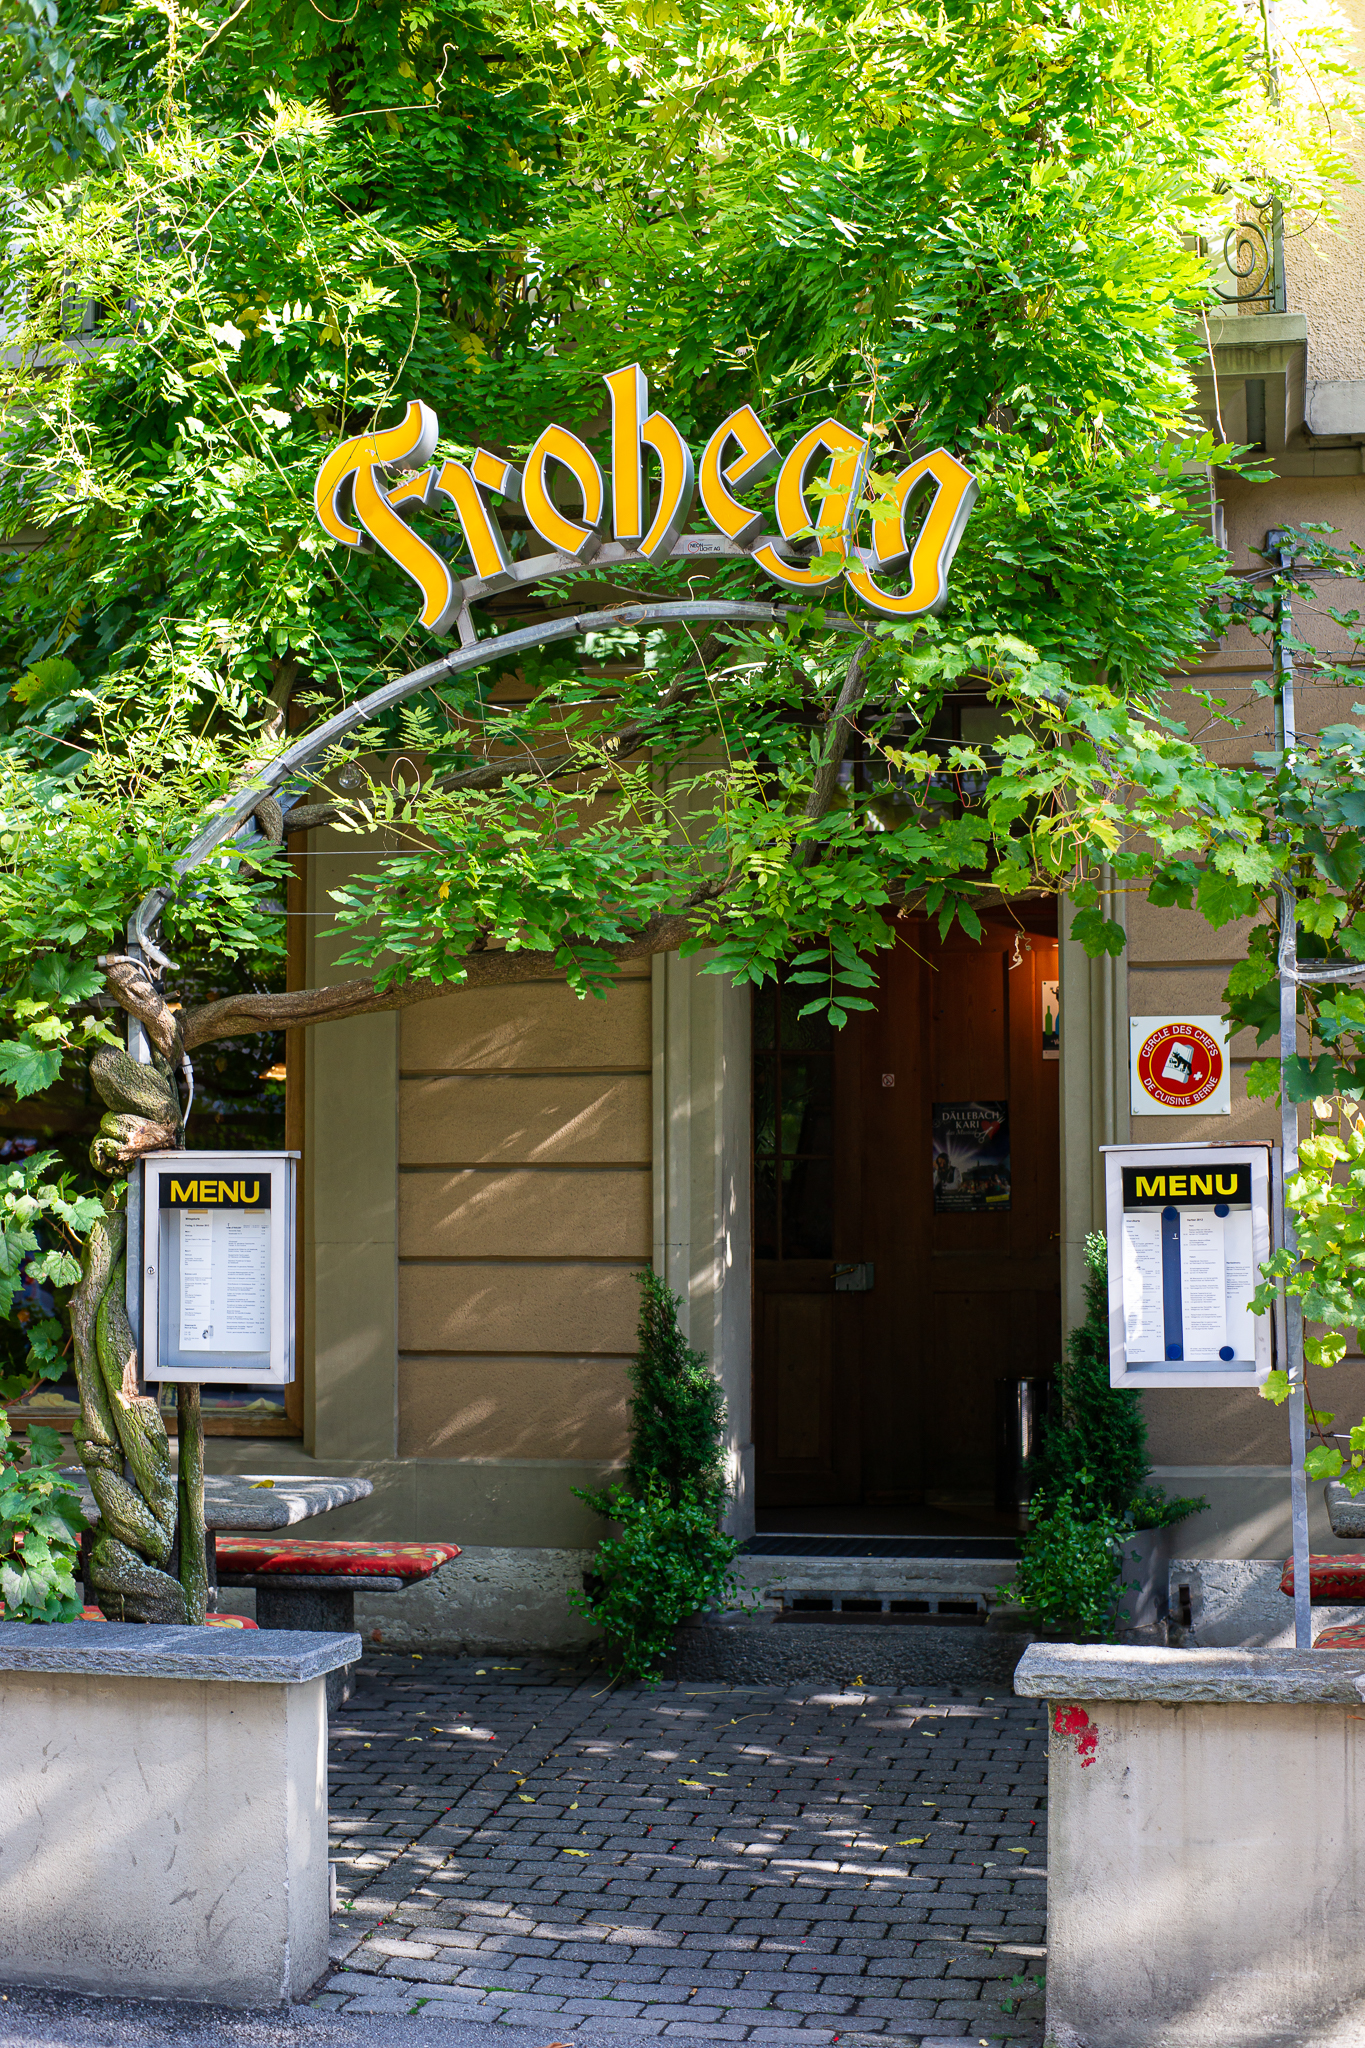 Restaurant Frohegg, Bern